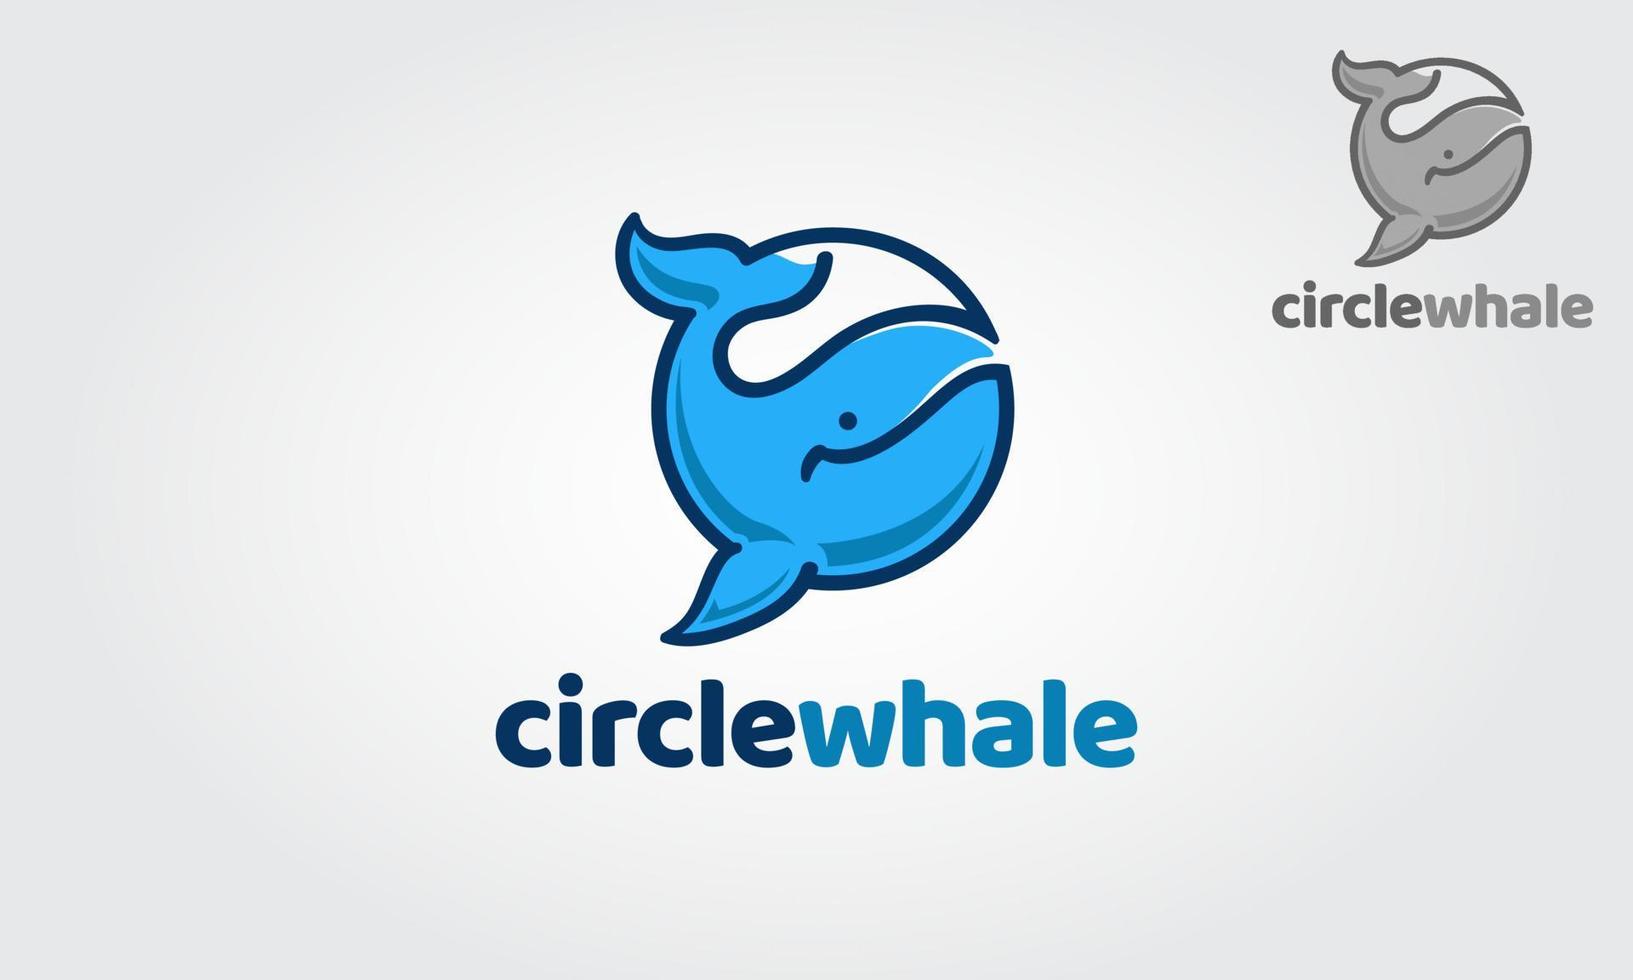 Circle Whale Vector Logo Template. A fun, professional, clean cute, and quirky logo.